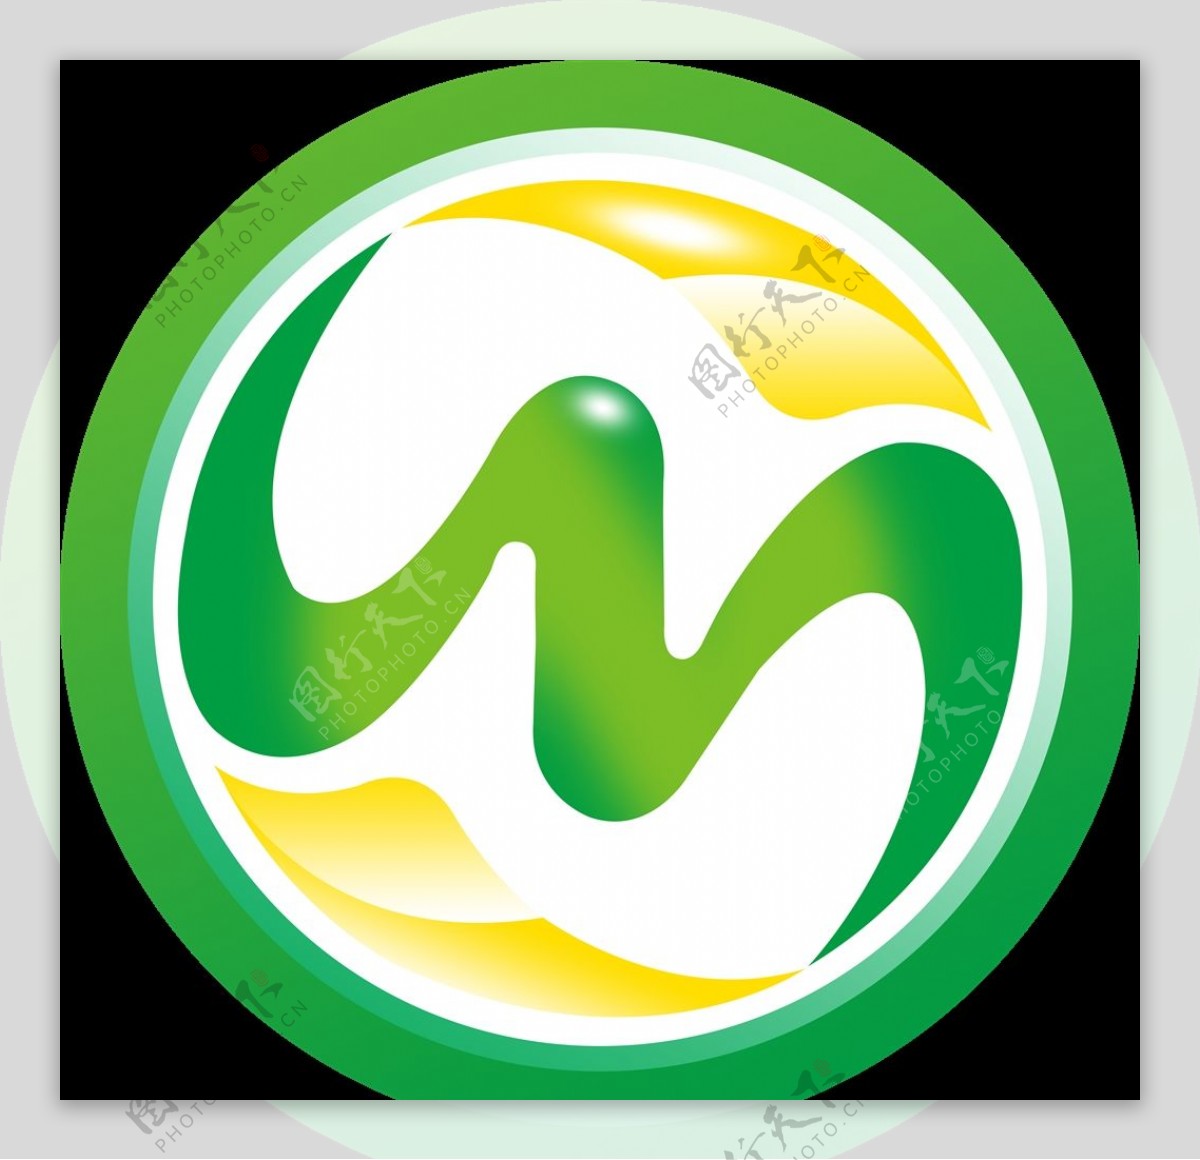 M标志logo